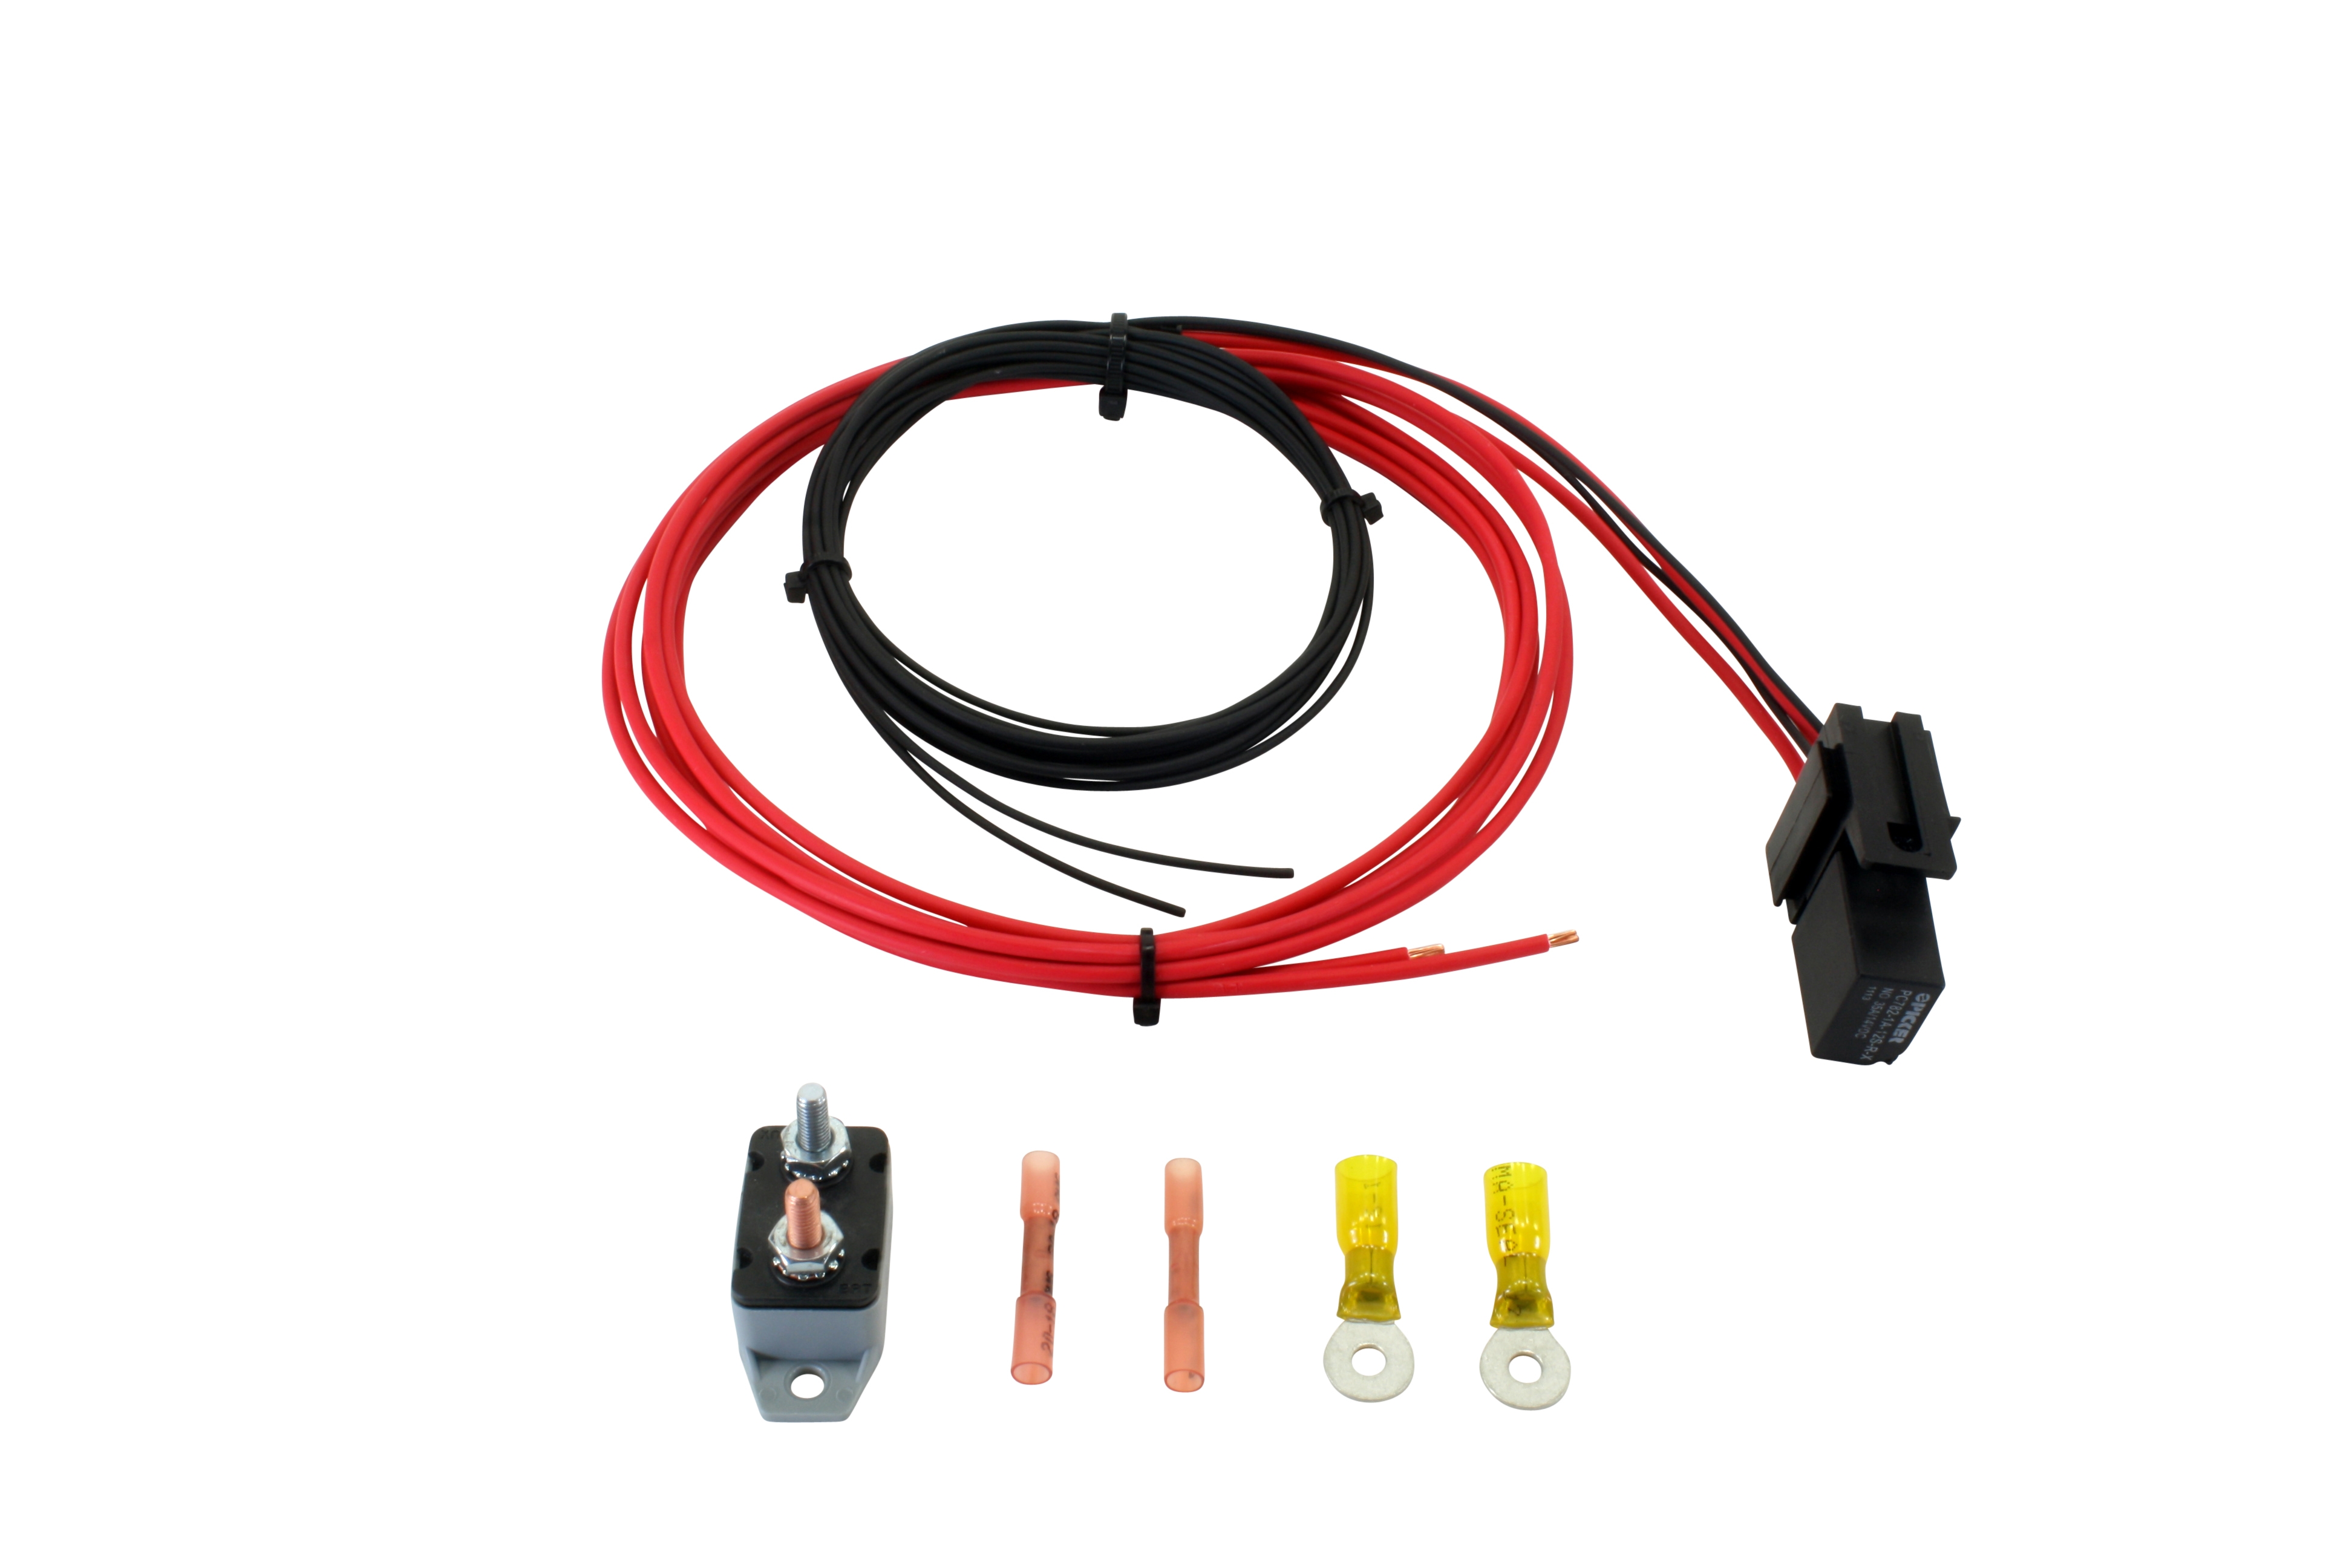 AEM 20 Amp Relay Wiring Kit. Includes 20 Amp Circuit Breaker(Auto reset, splash and dustproof), 30 Amp Relay, 80" 12 gauge Mini-Harness, Terminals & Connectors